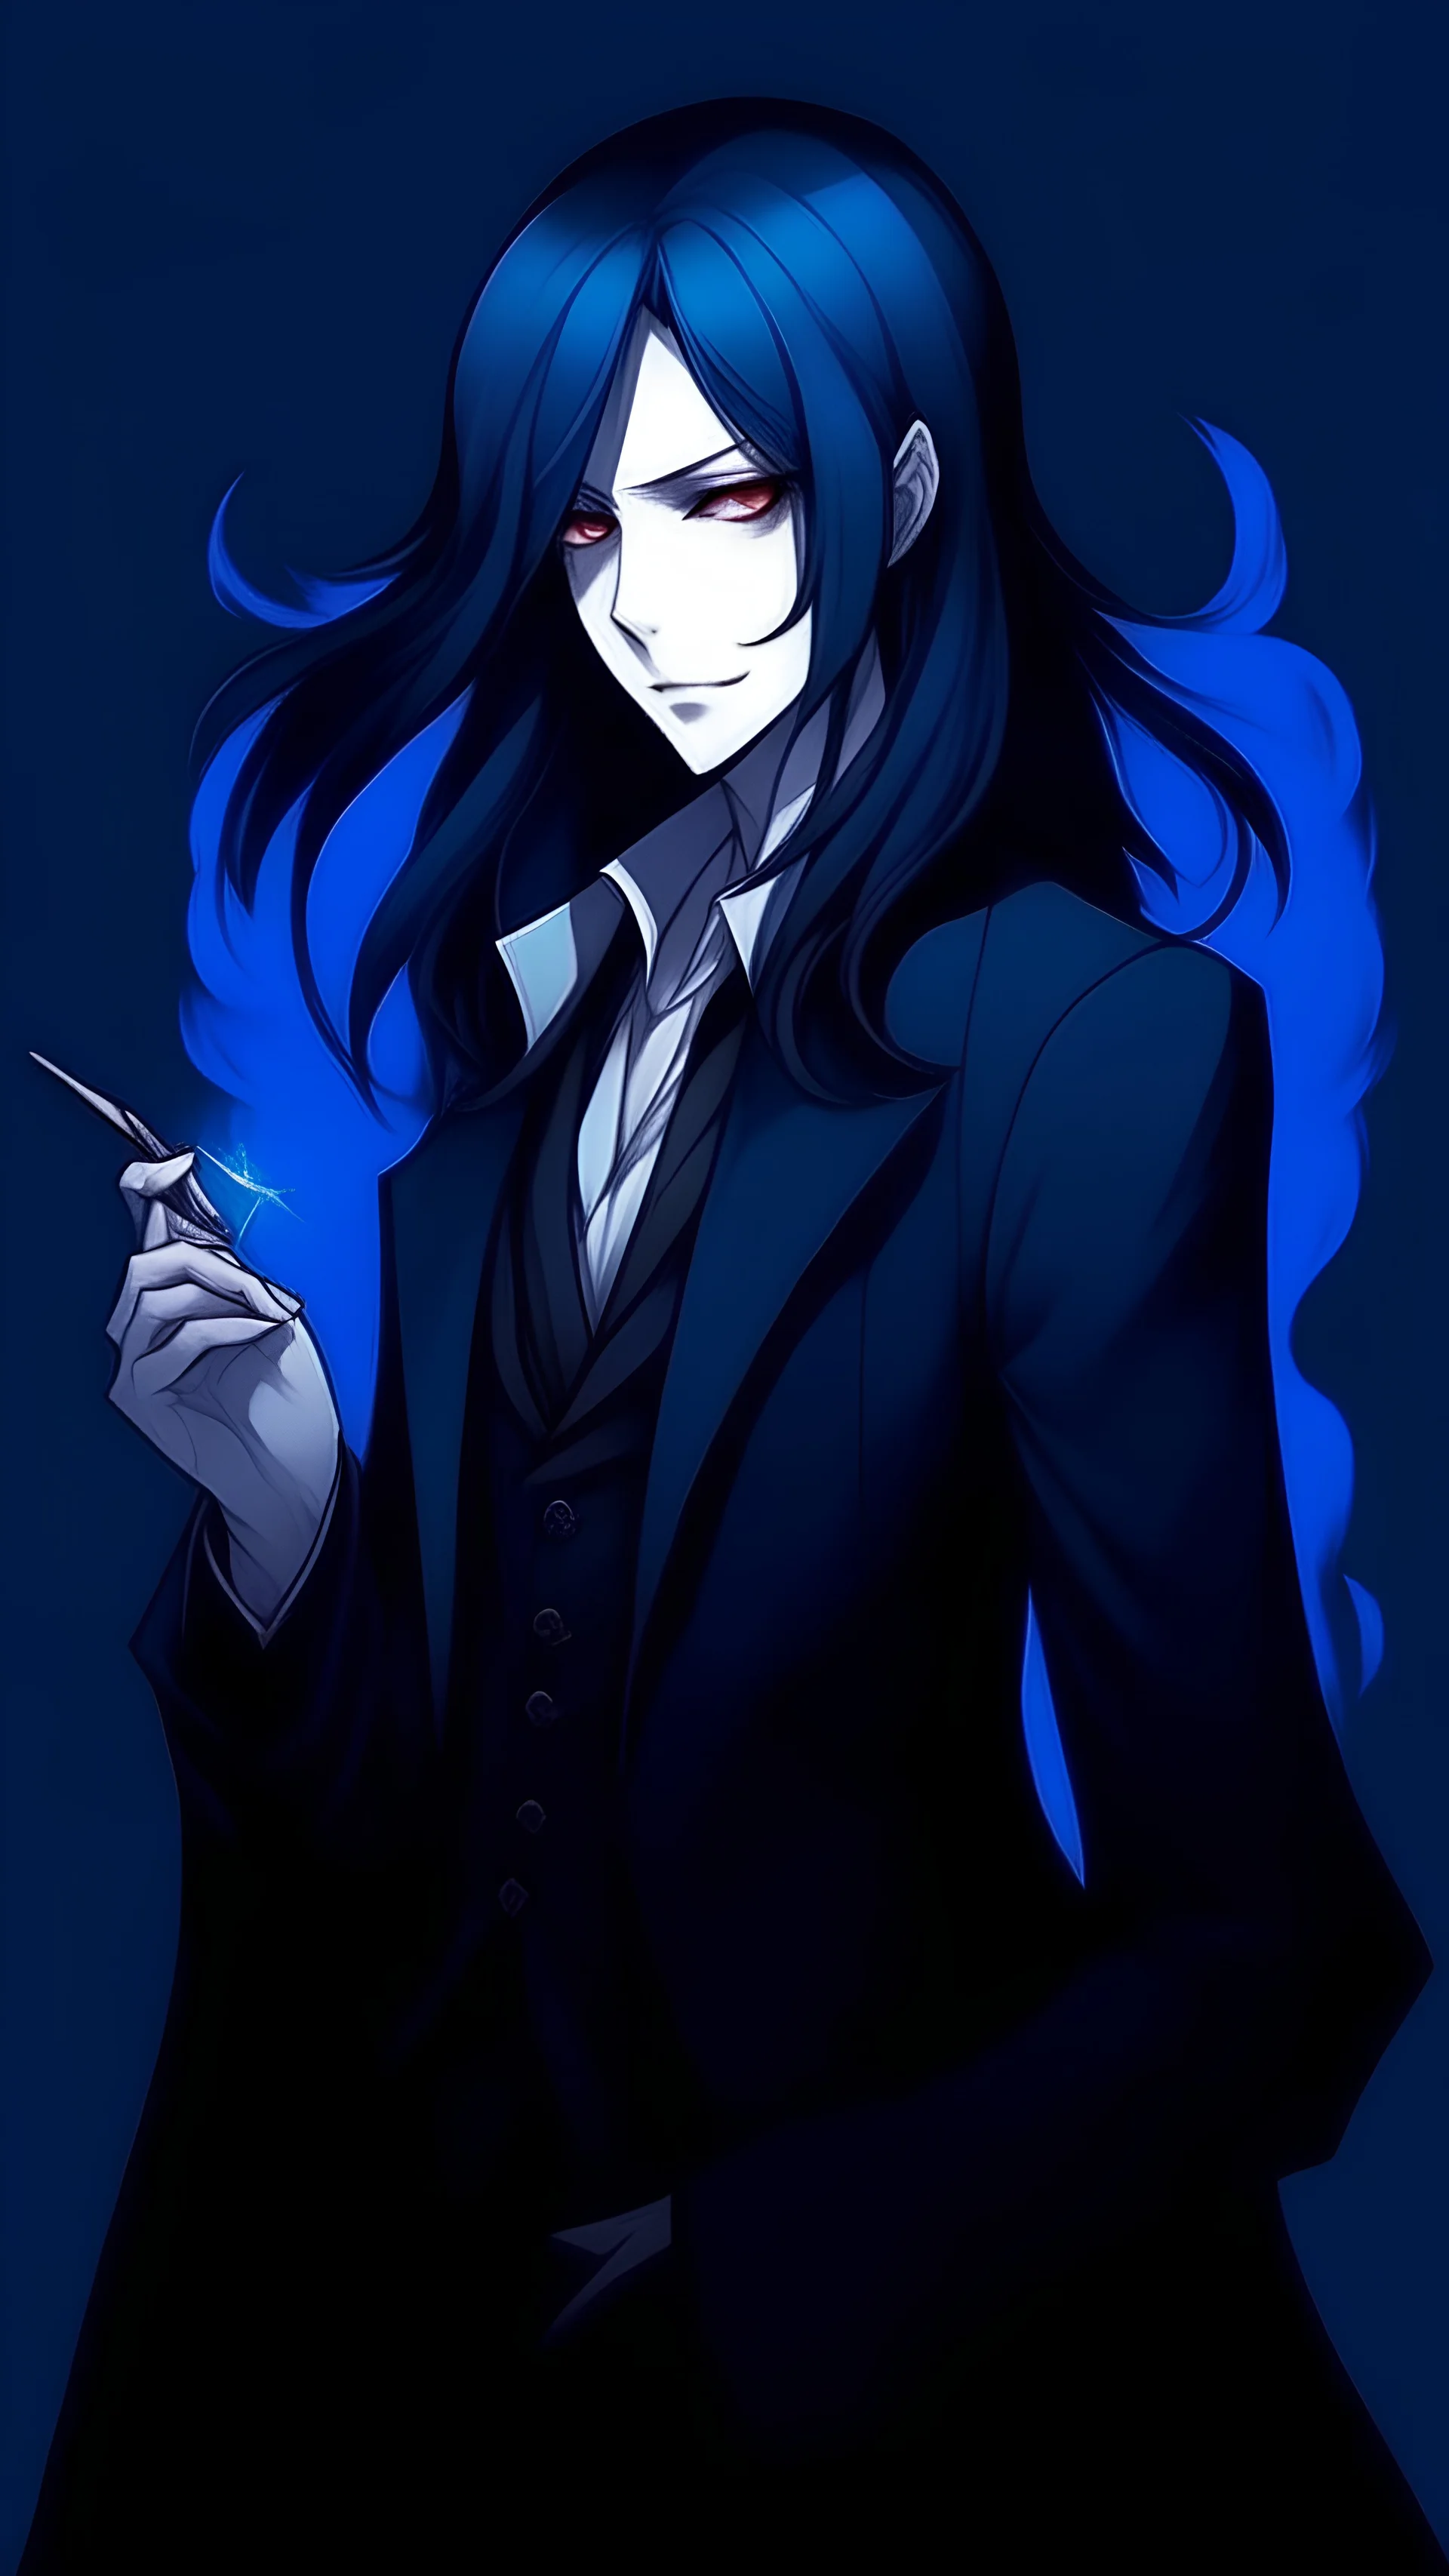 A Demon evil dark Butler long hair, fading into dark smoke blue hair, anime, tall, androgynous